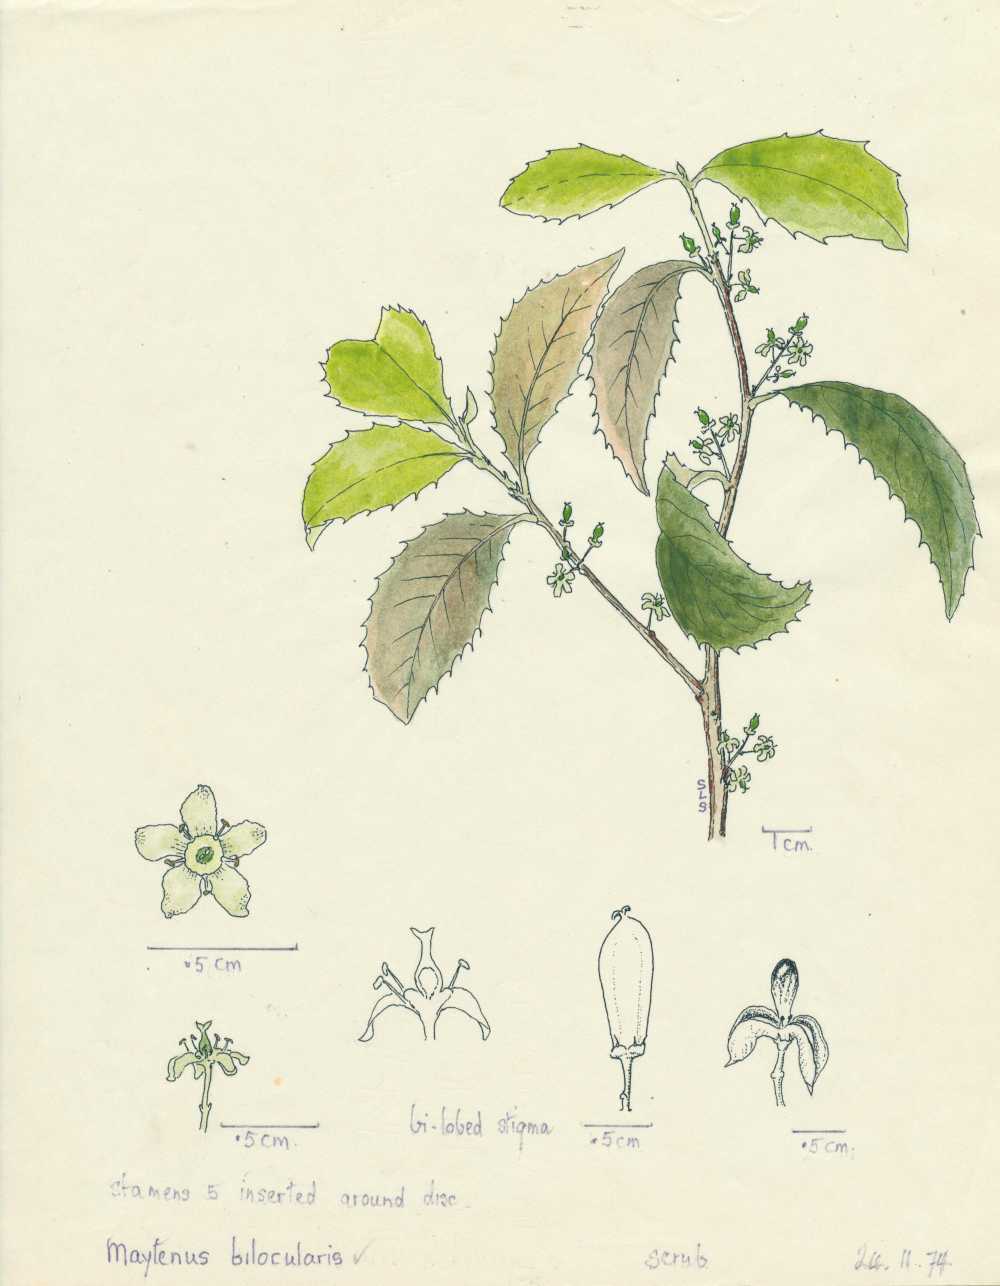 Denhamia bilocularis | depiction by Sylvia Seiler, Killara, West Boondooma | Queensland Native Seeds